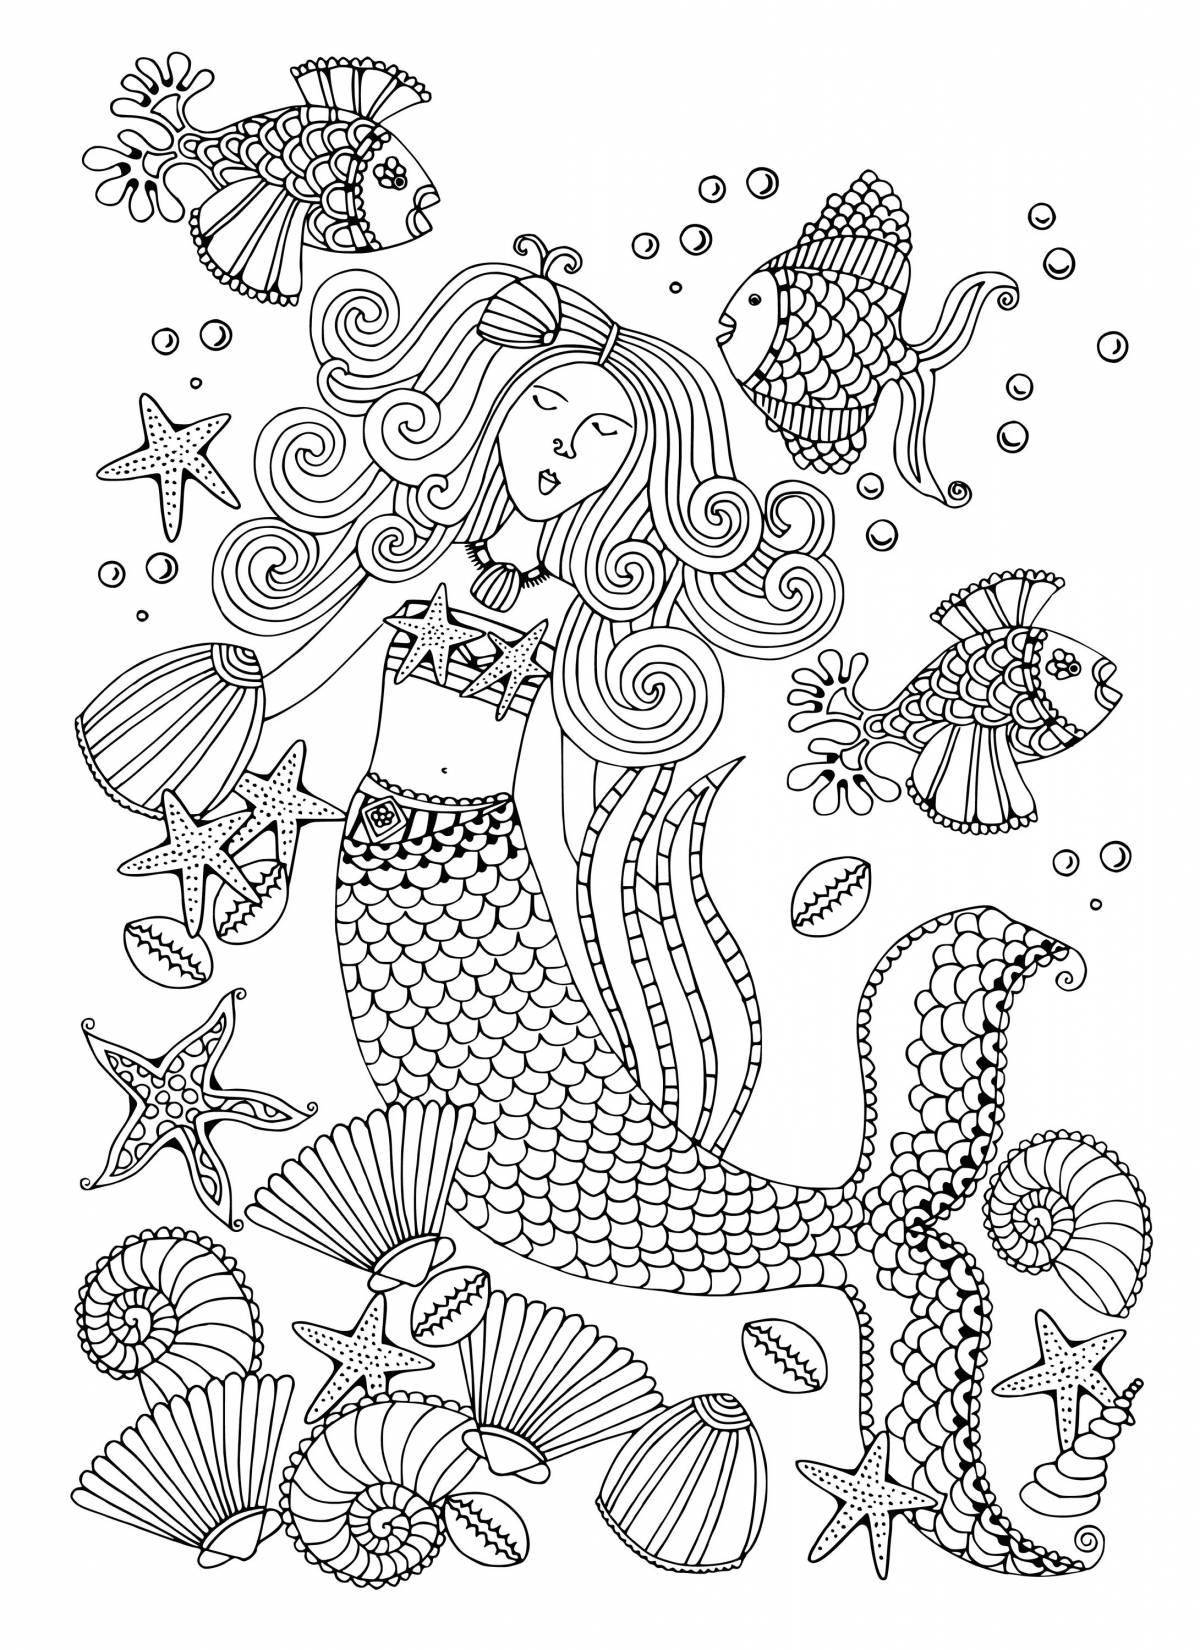 Delightful coloring mermaid complex